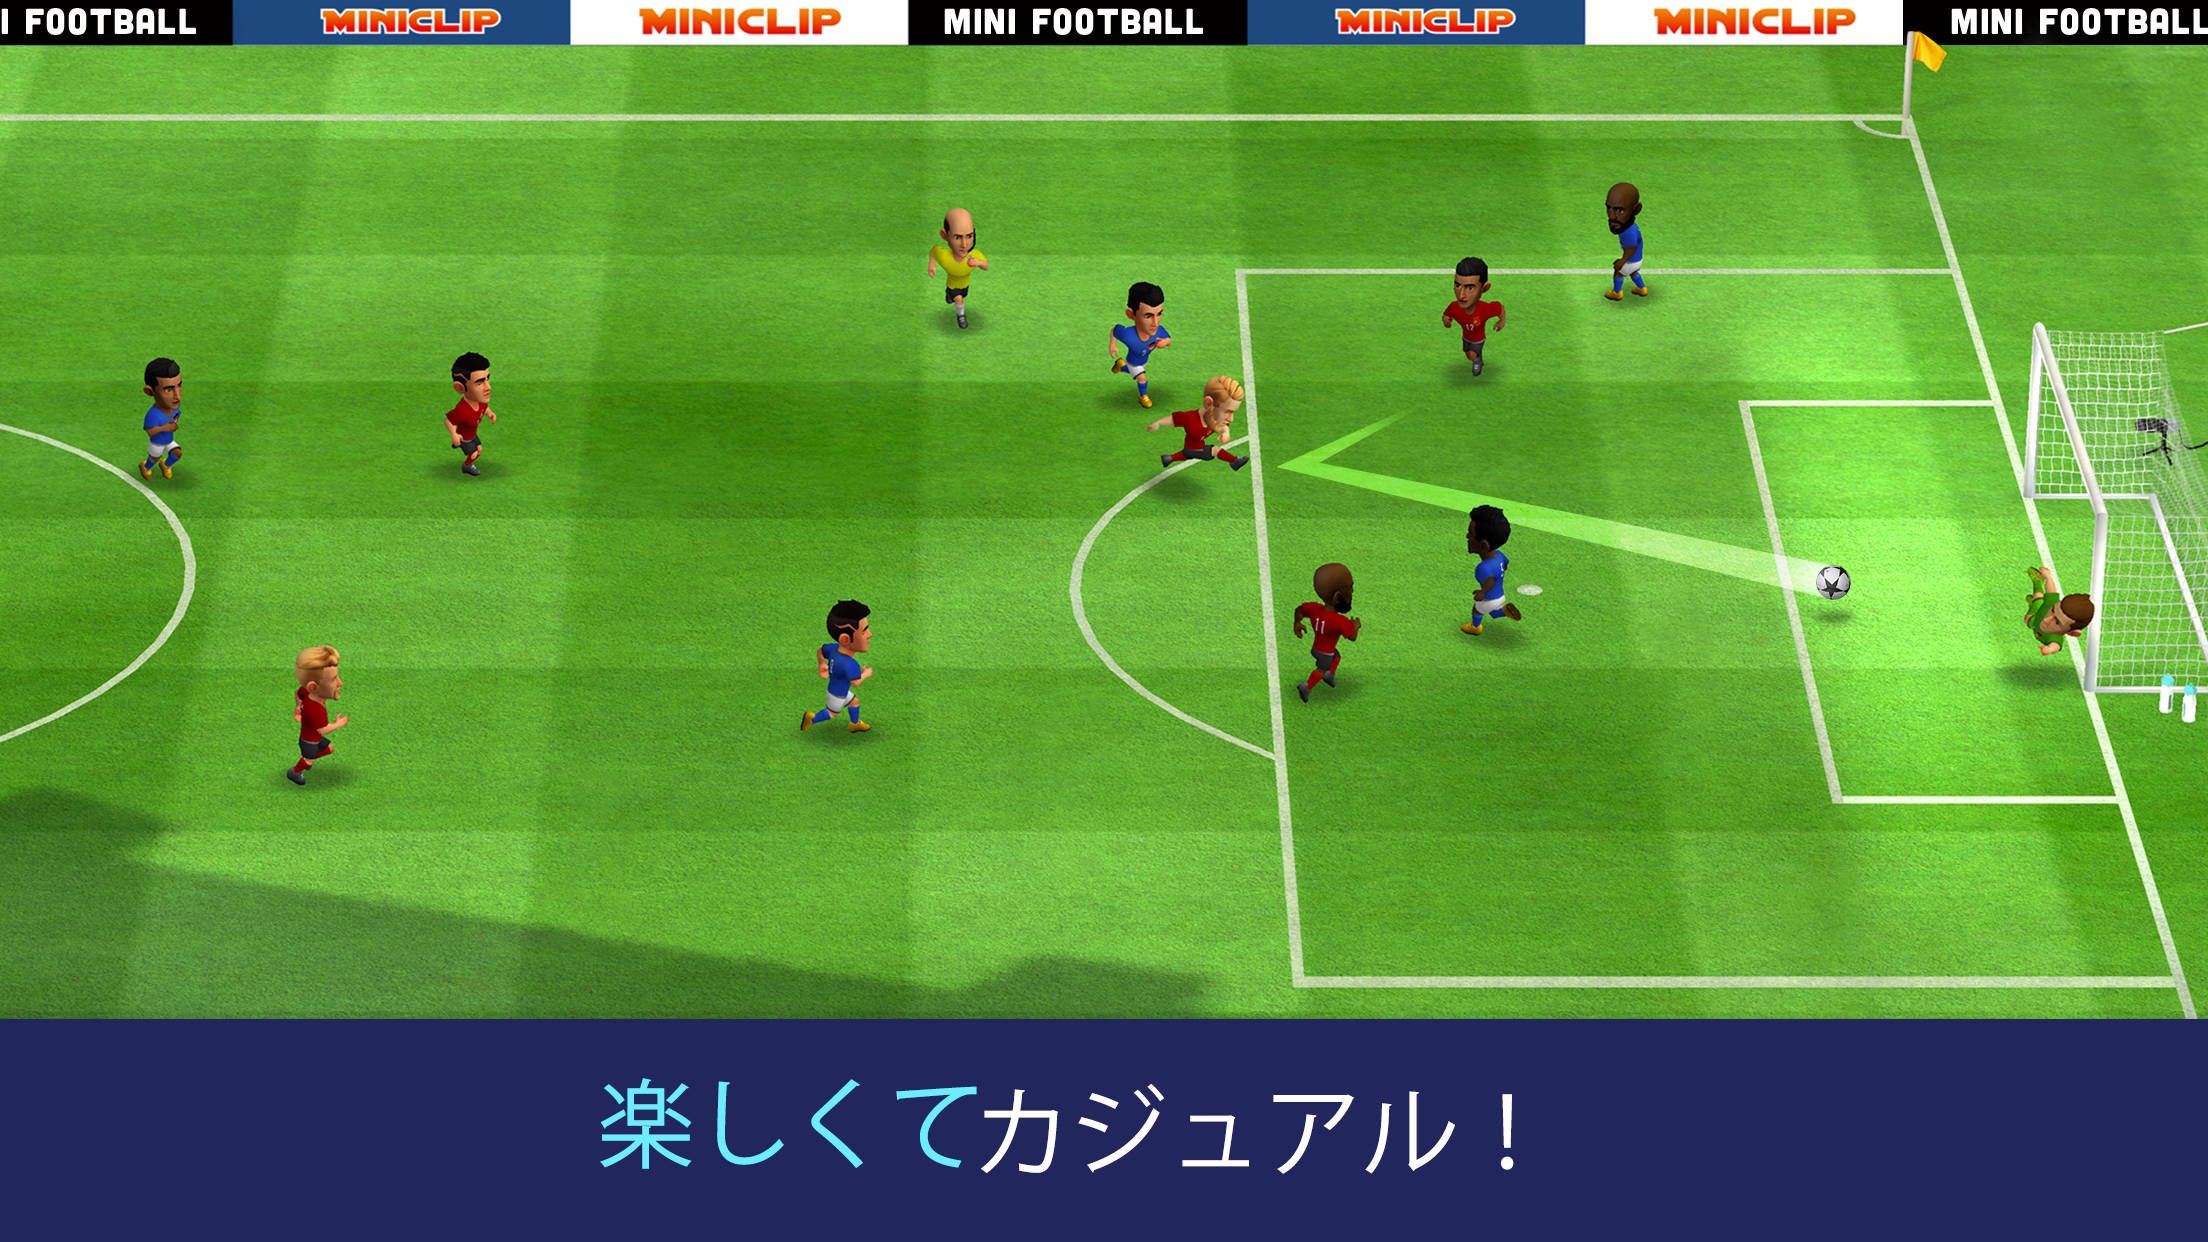 Screenshot 1 of ミニフットボール 3.1.0